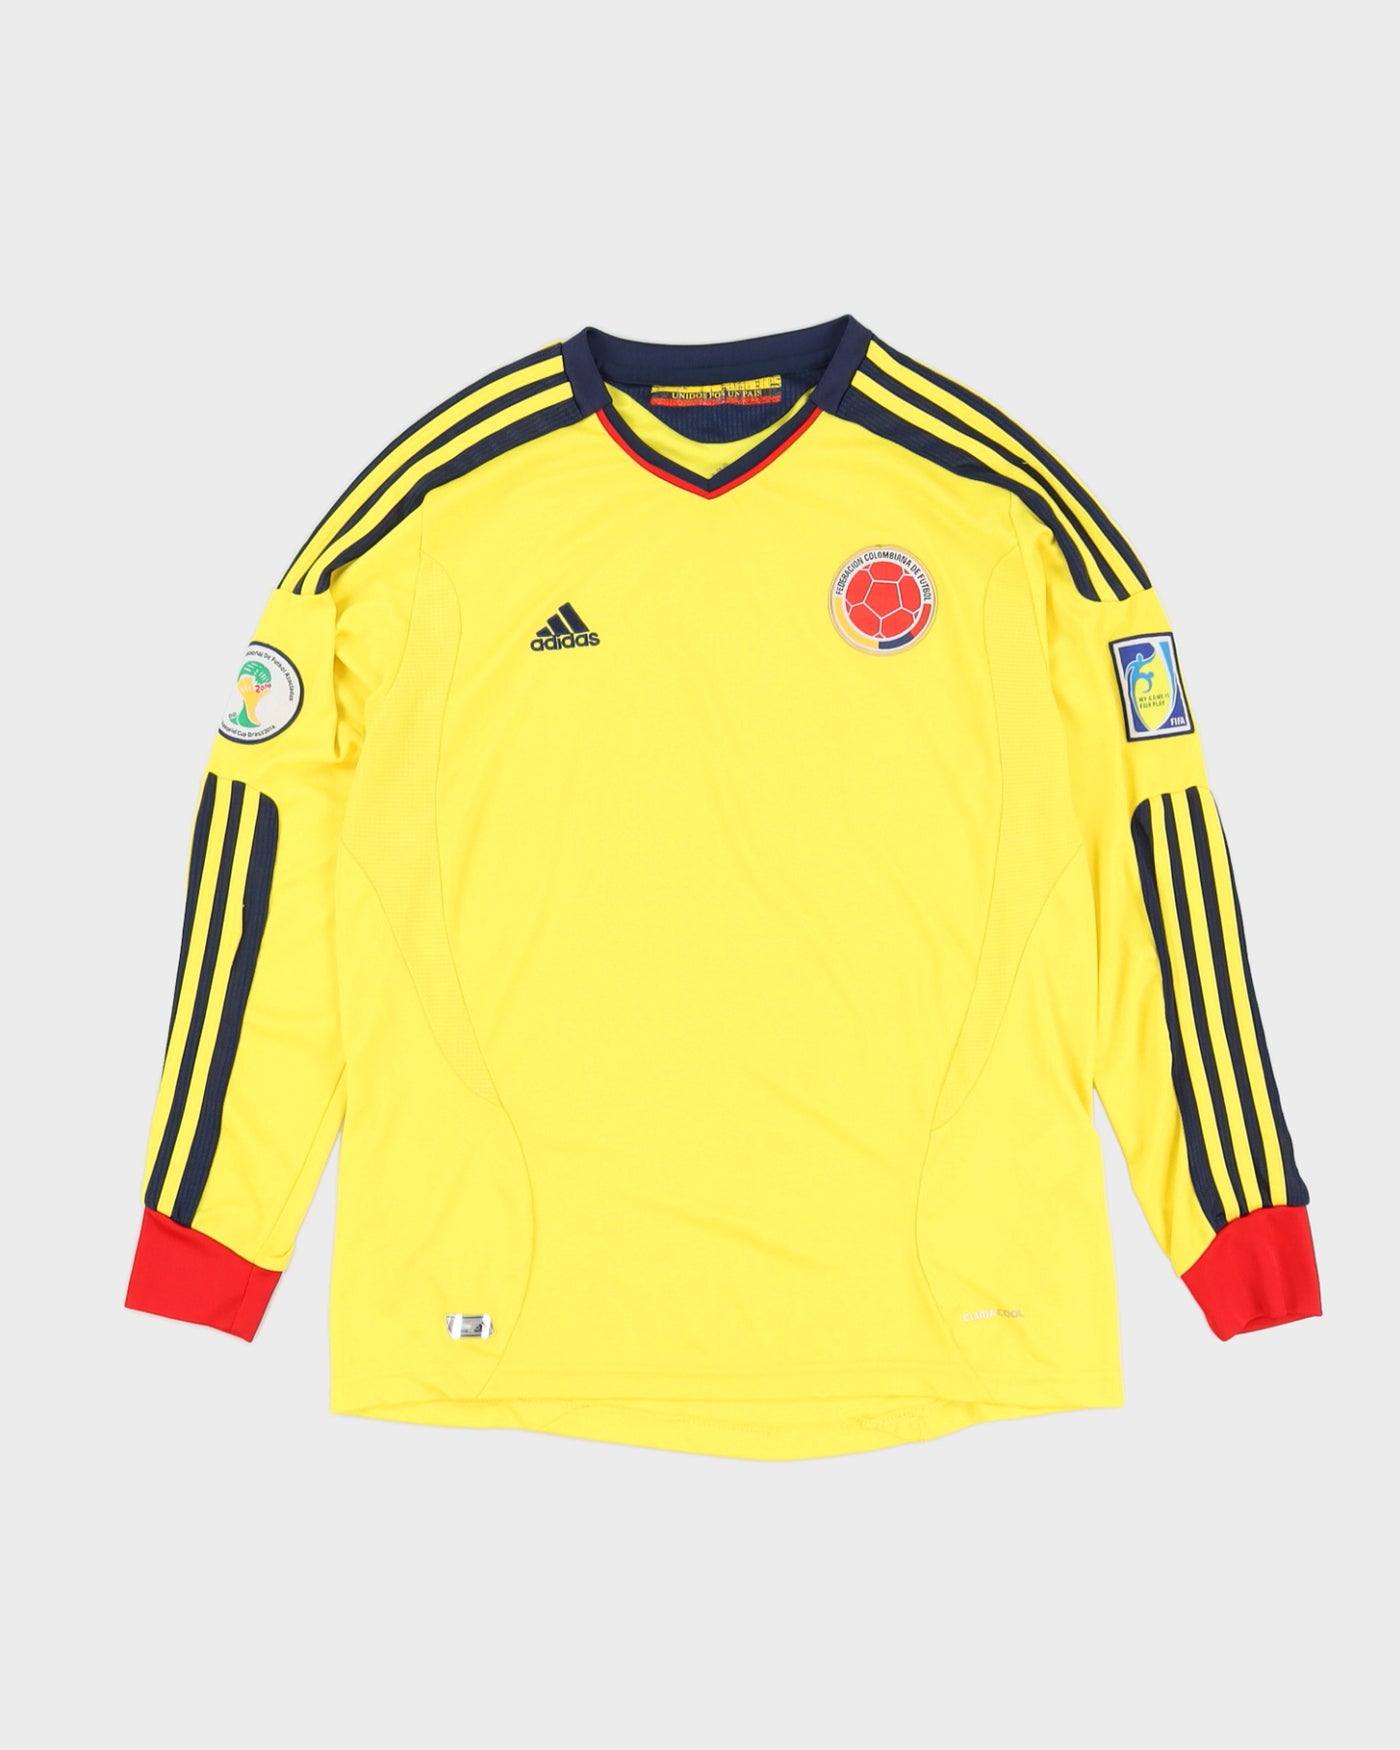 2014 Adidas Colombia International Team Football Shirt - L